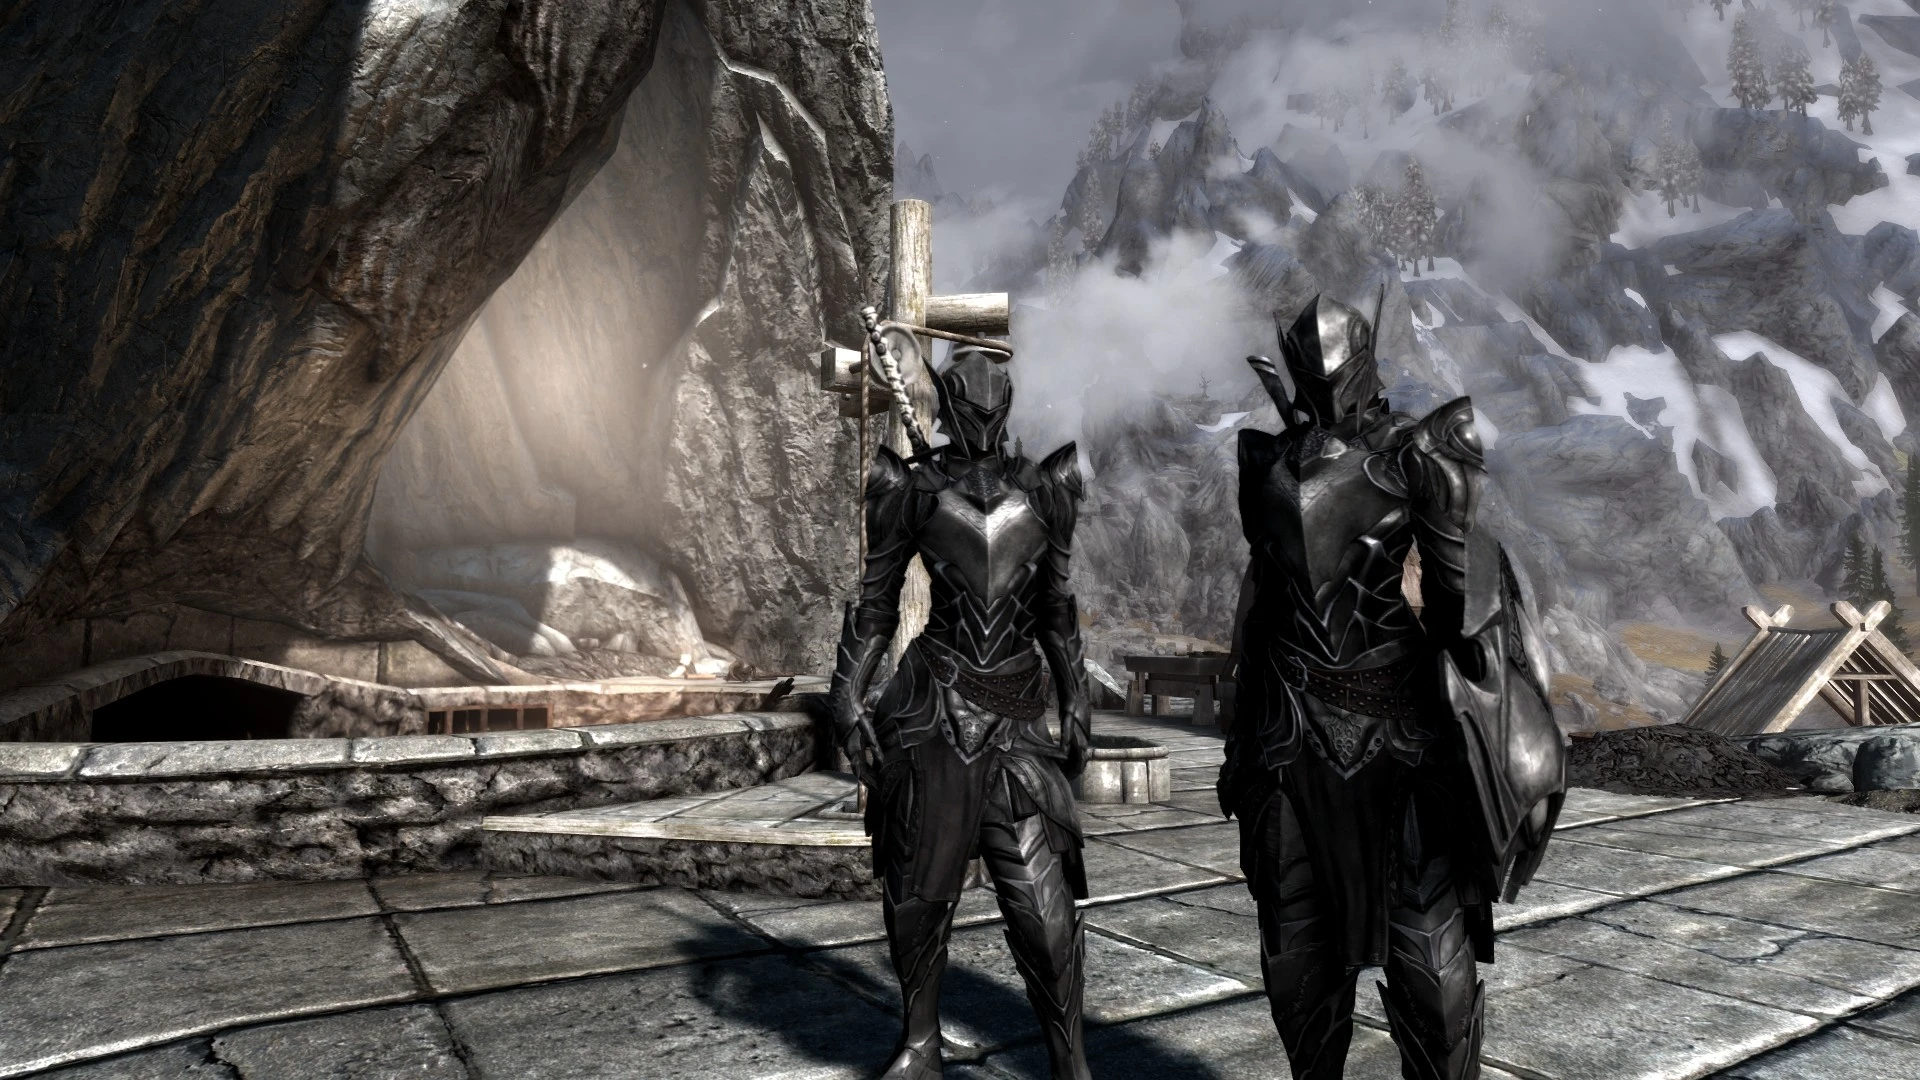 steel ebony armor at skyrim special edition nexus mods and community.